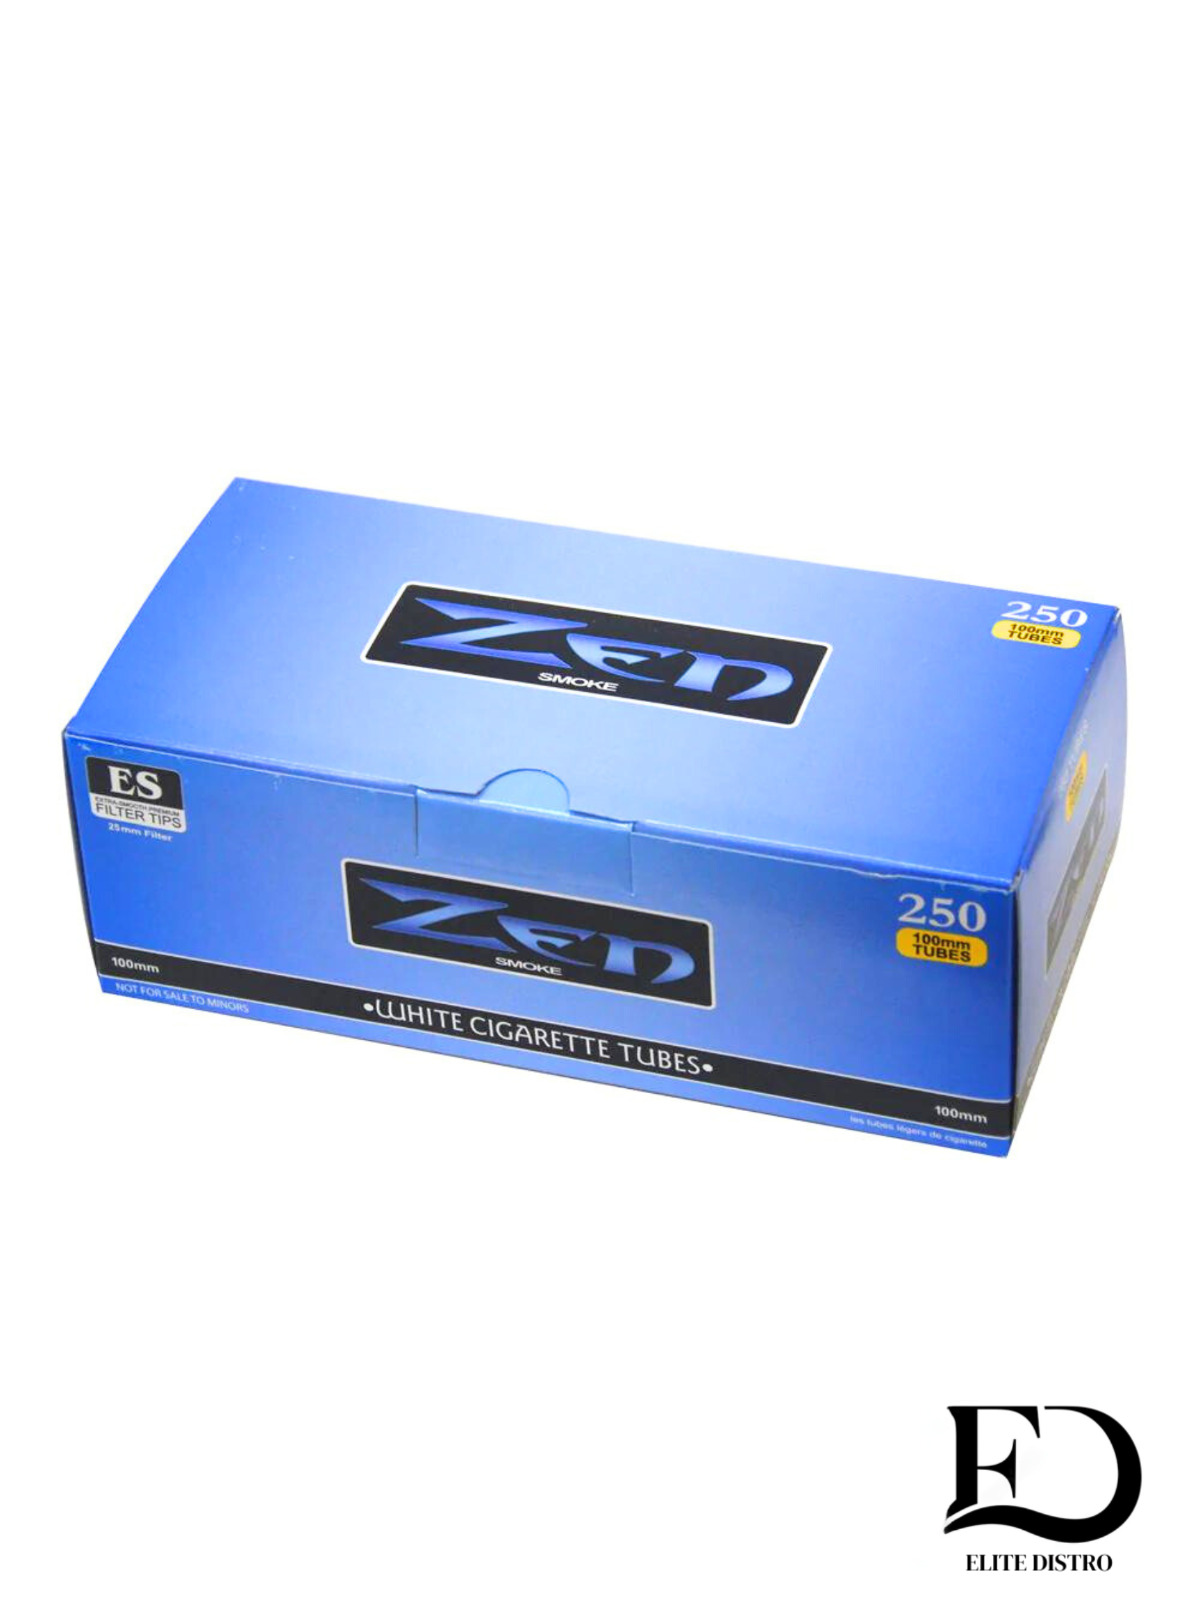 ZEN white tubes 100MM 5 boxes x (250ct/box) 1250 Total tubes